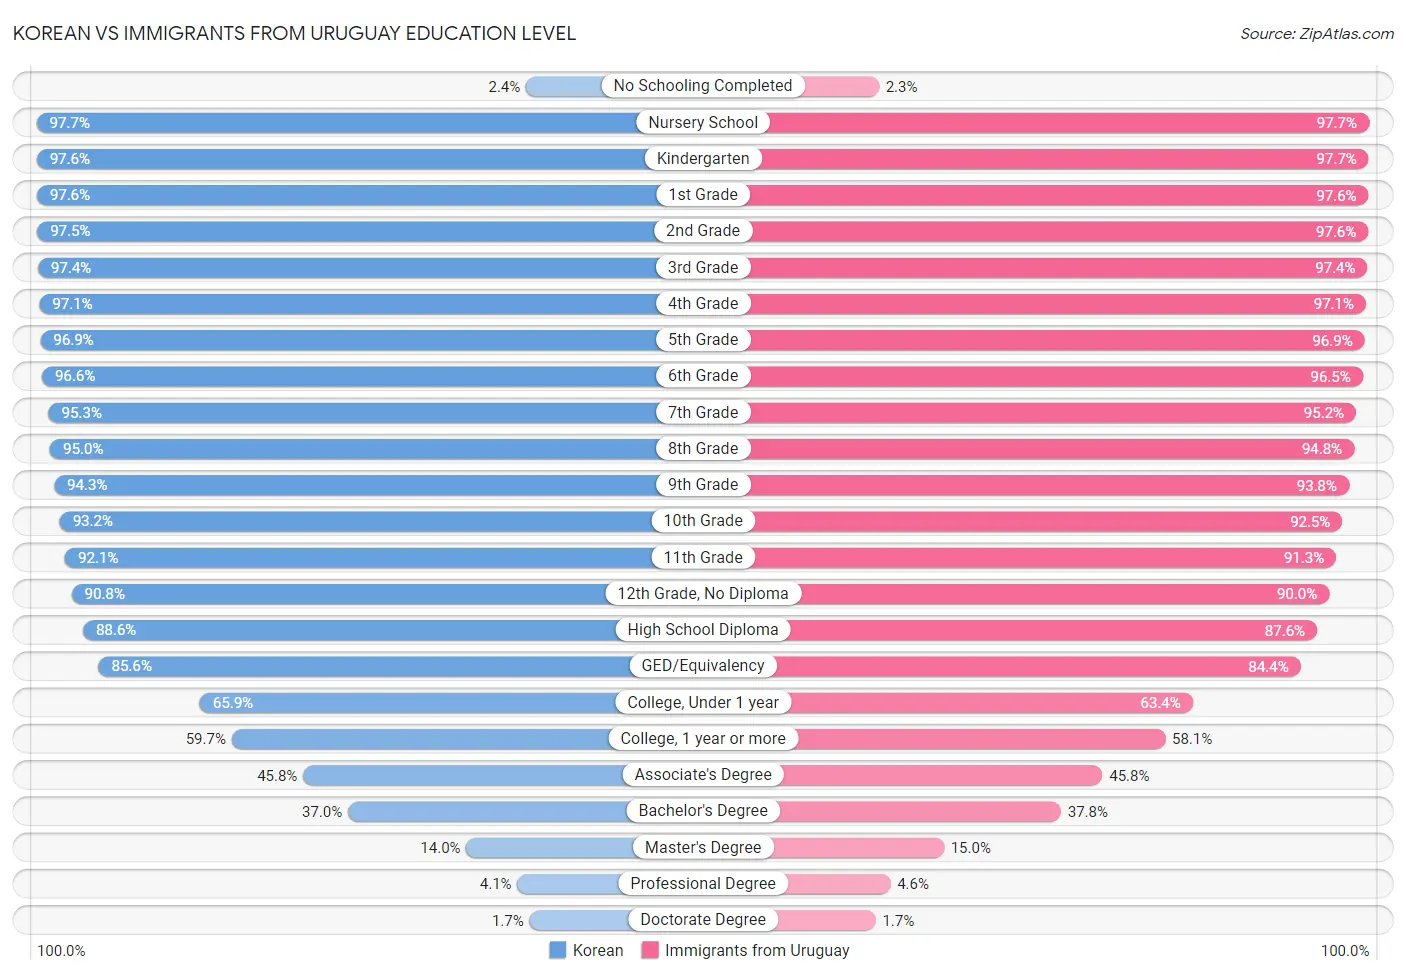 Korean vs Immigrants from Uruguay Education Level